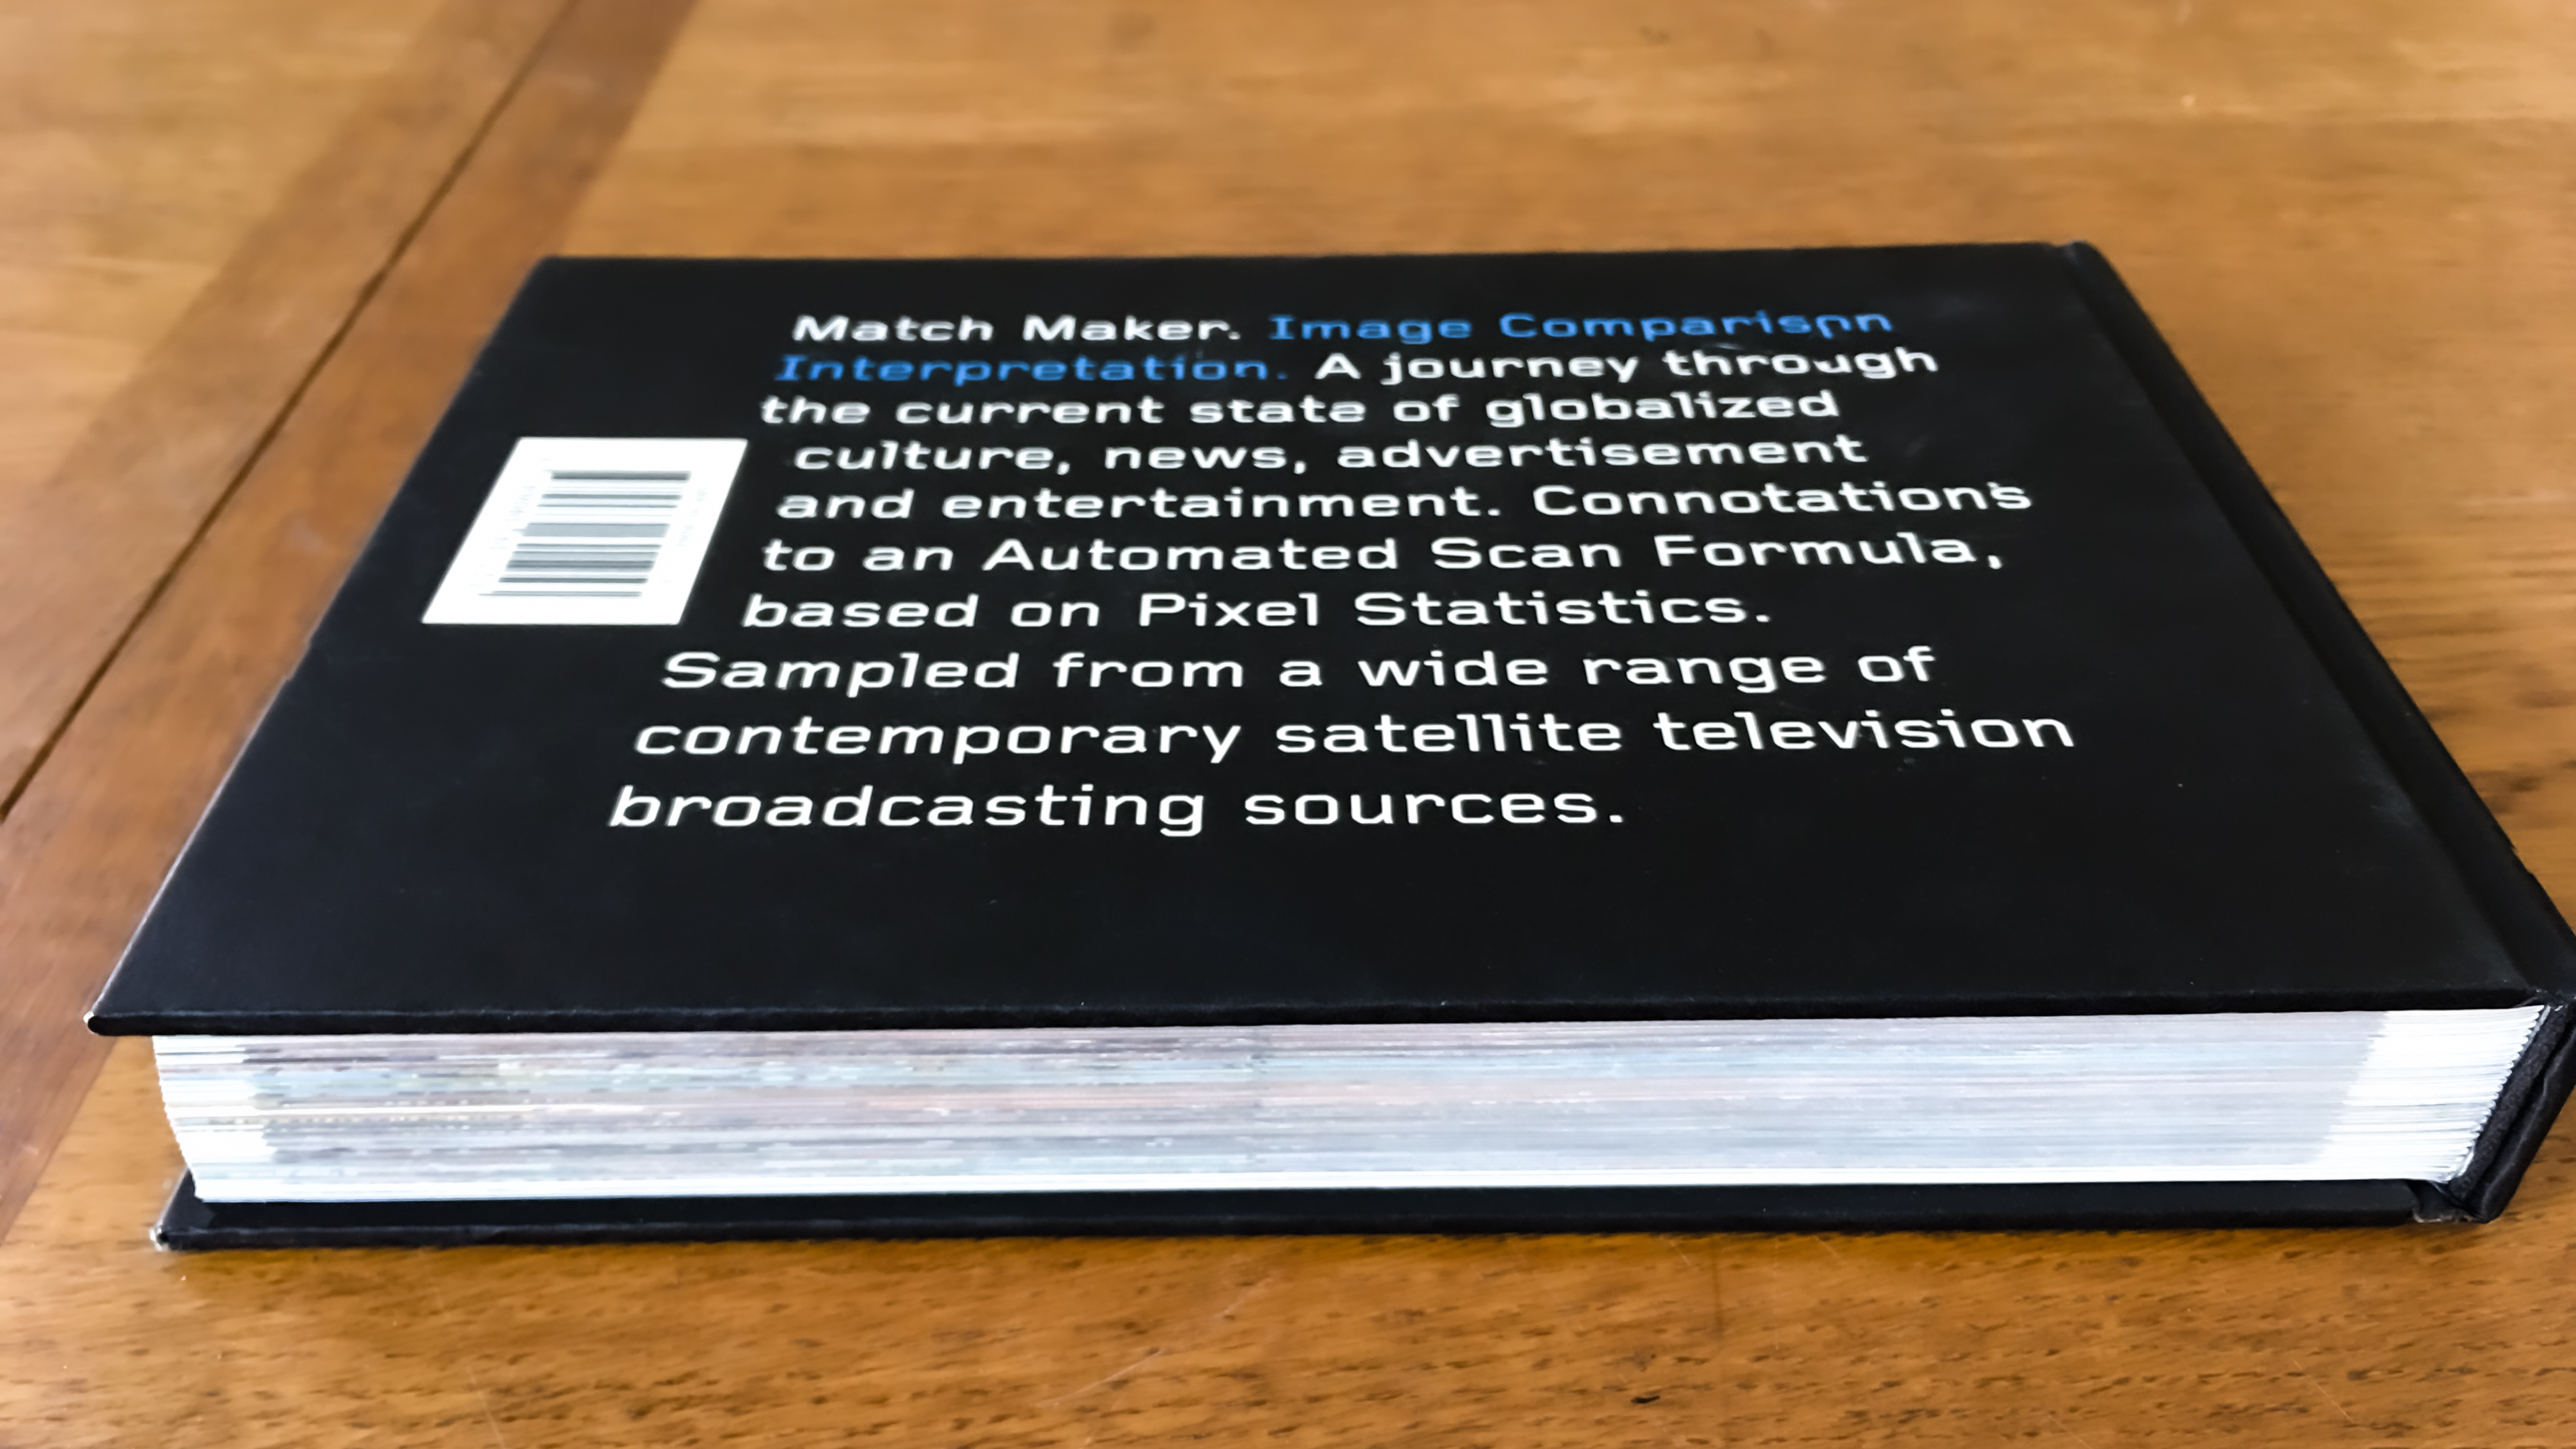 Match Maker: Image Comparison Interpretation October, 2005 by Geert Mul